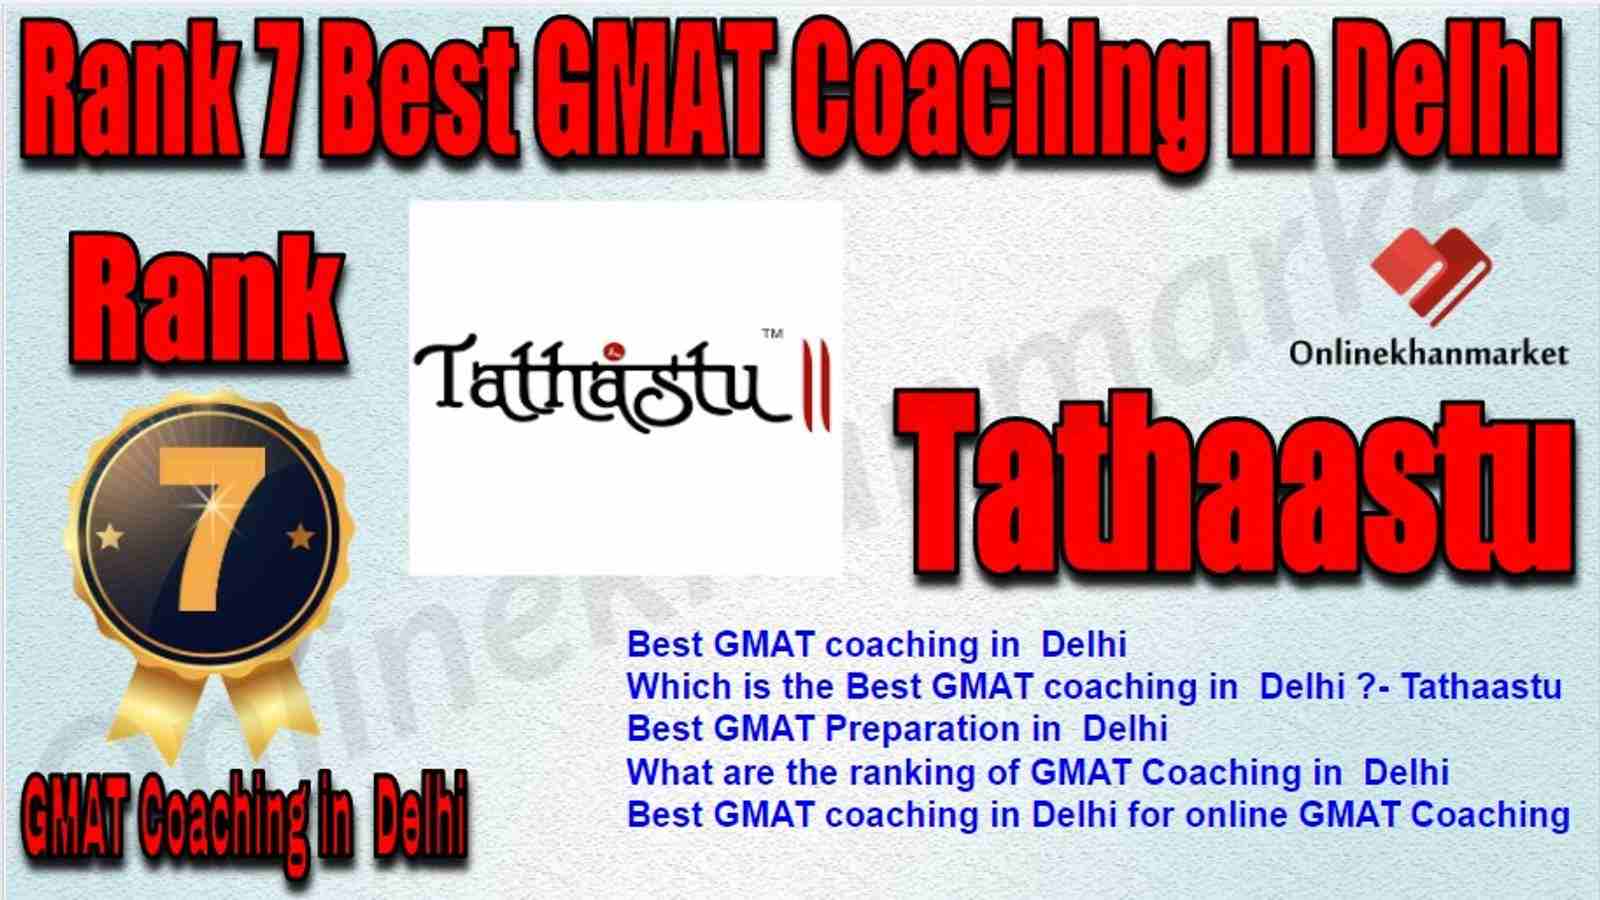 Rank 7 Best GMAT Coaching in Delhi